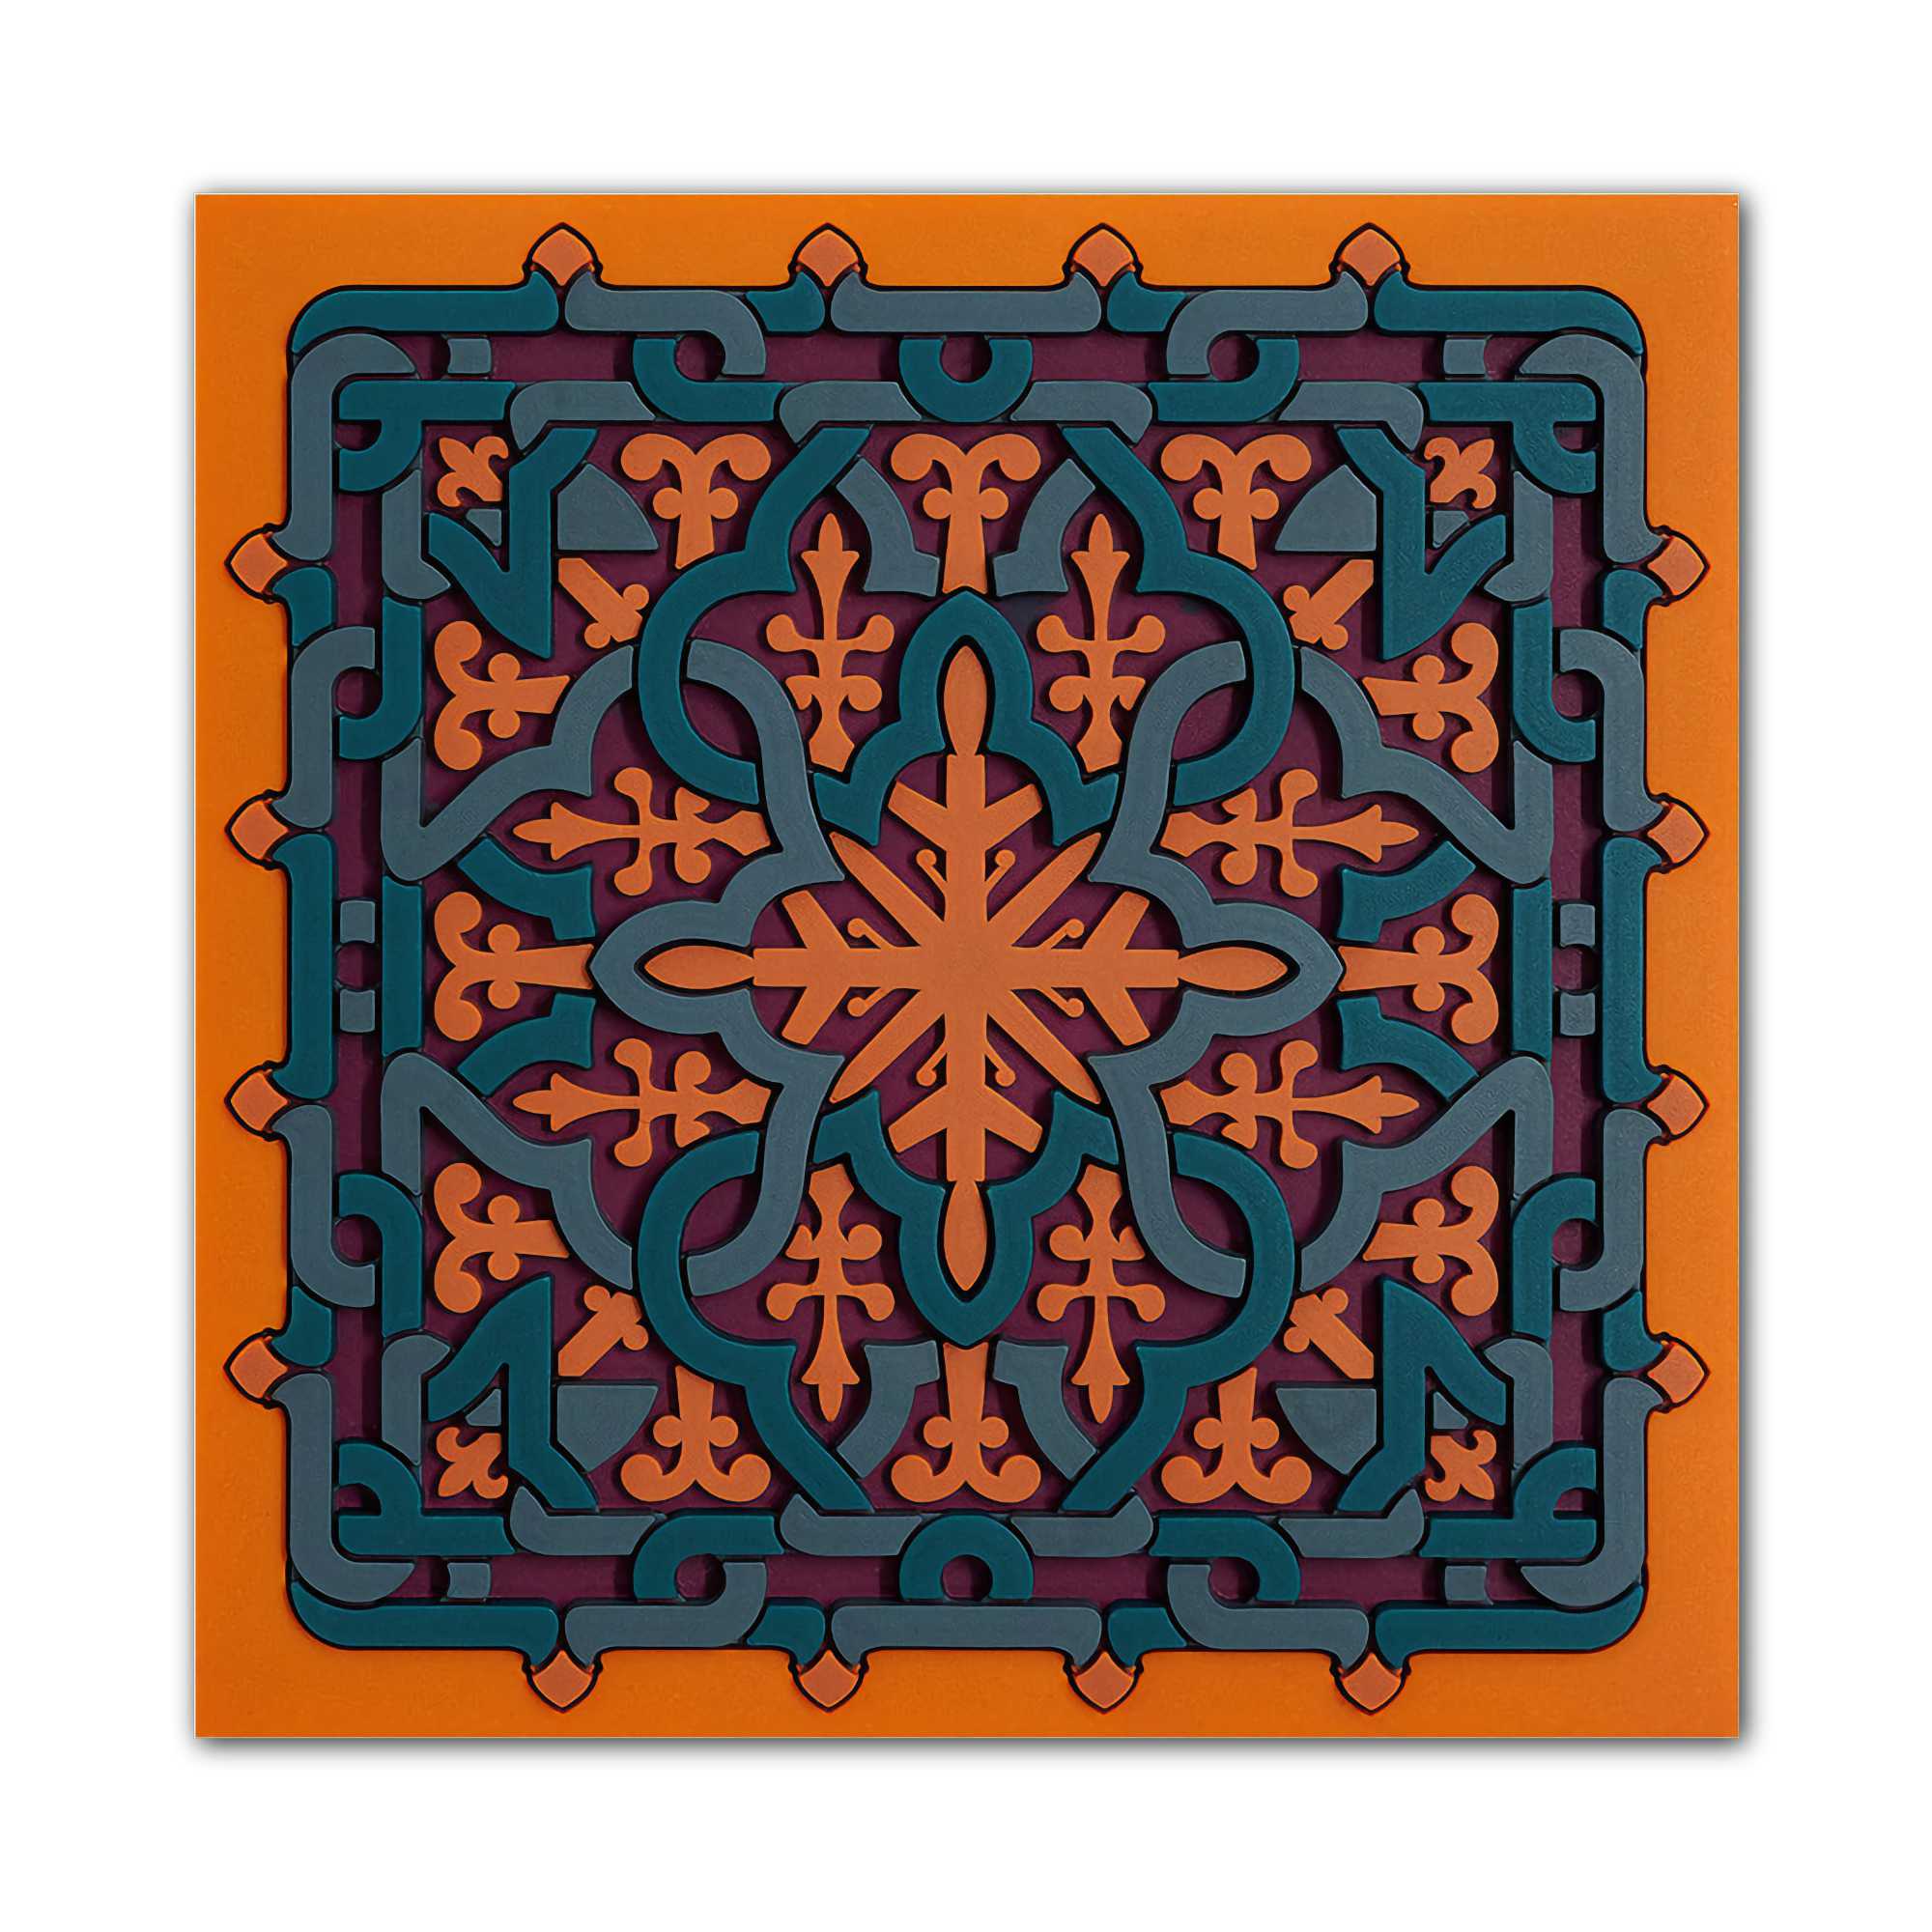 Images d'Orient Silicone Coaster, vagabonde crohet soie (9x9 cm)